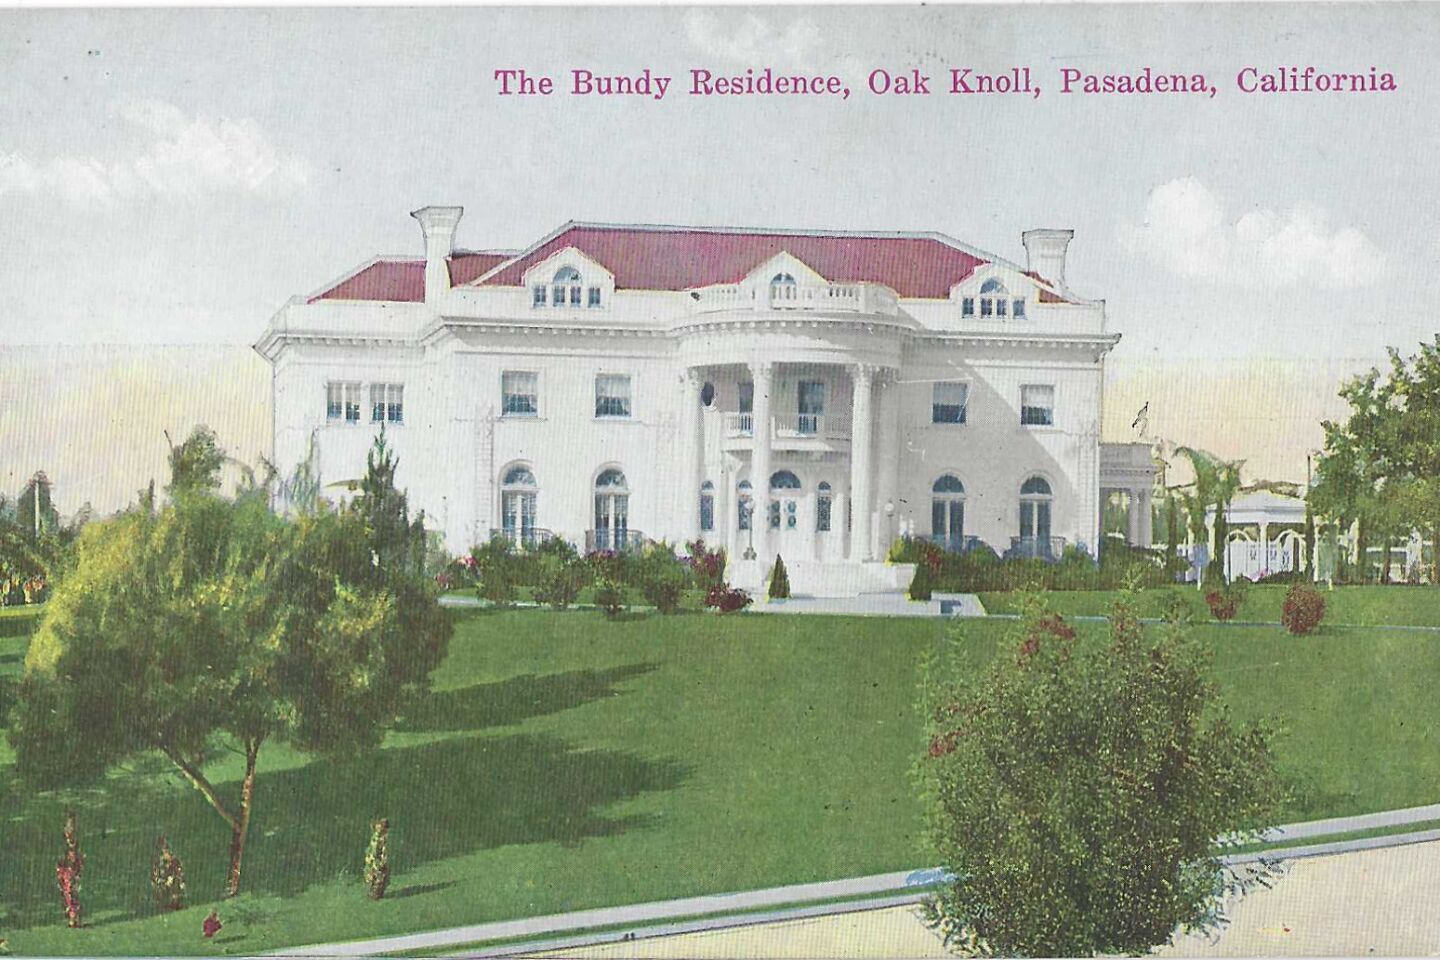 The Bundy Residence, Oak Knoll, Pasadena, California